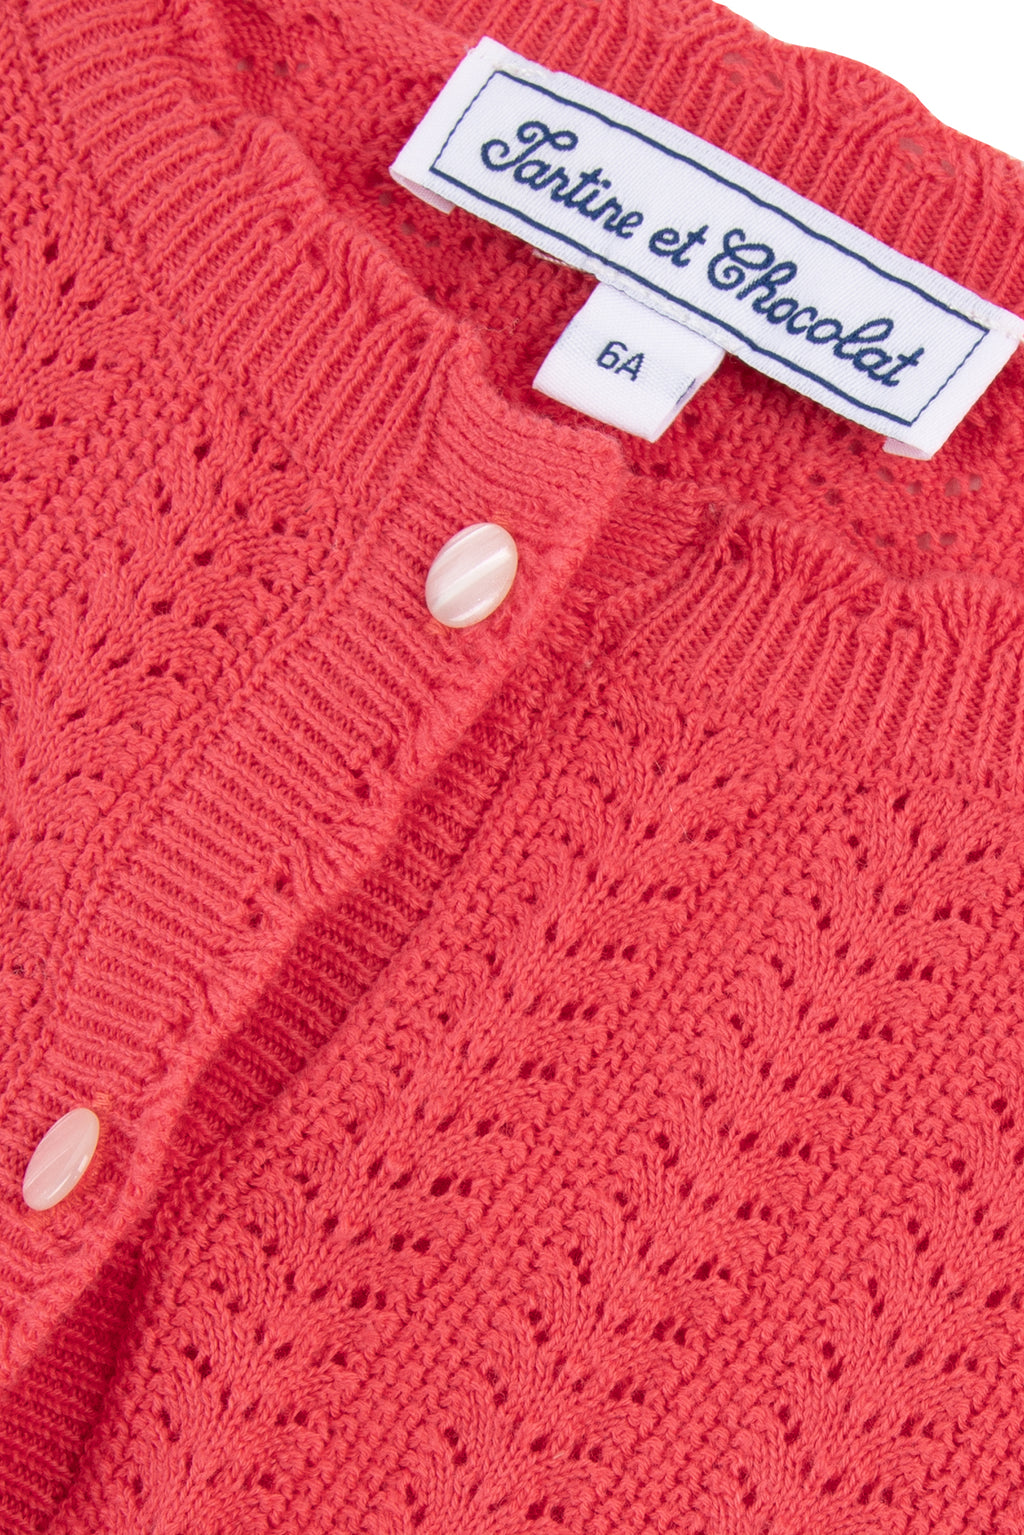 Cardigan - Red Knitwear